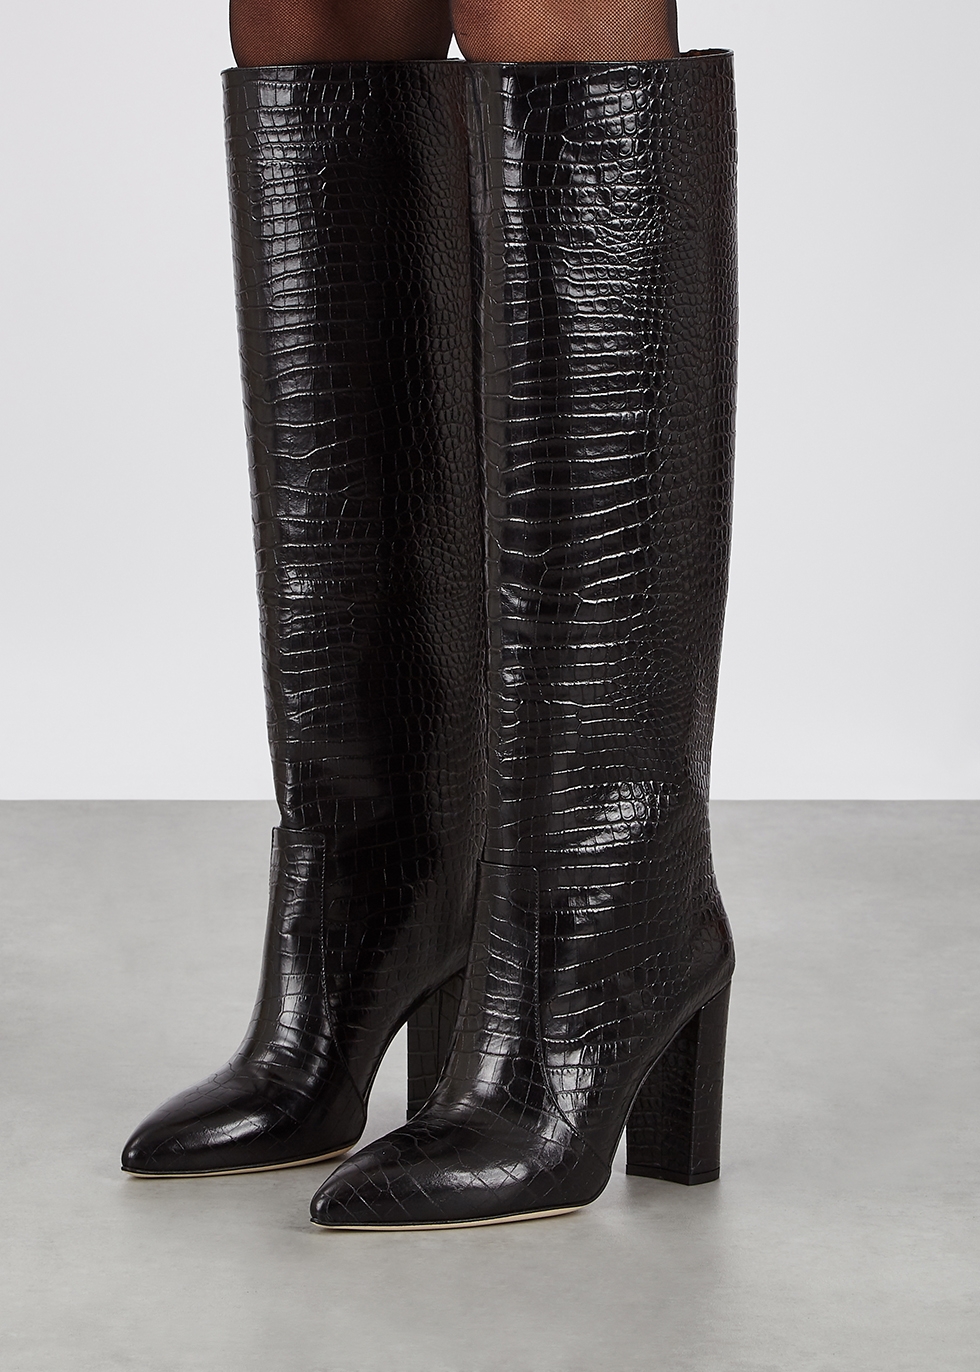 black croc knee high boots